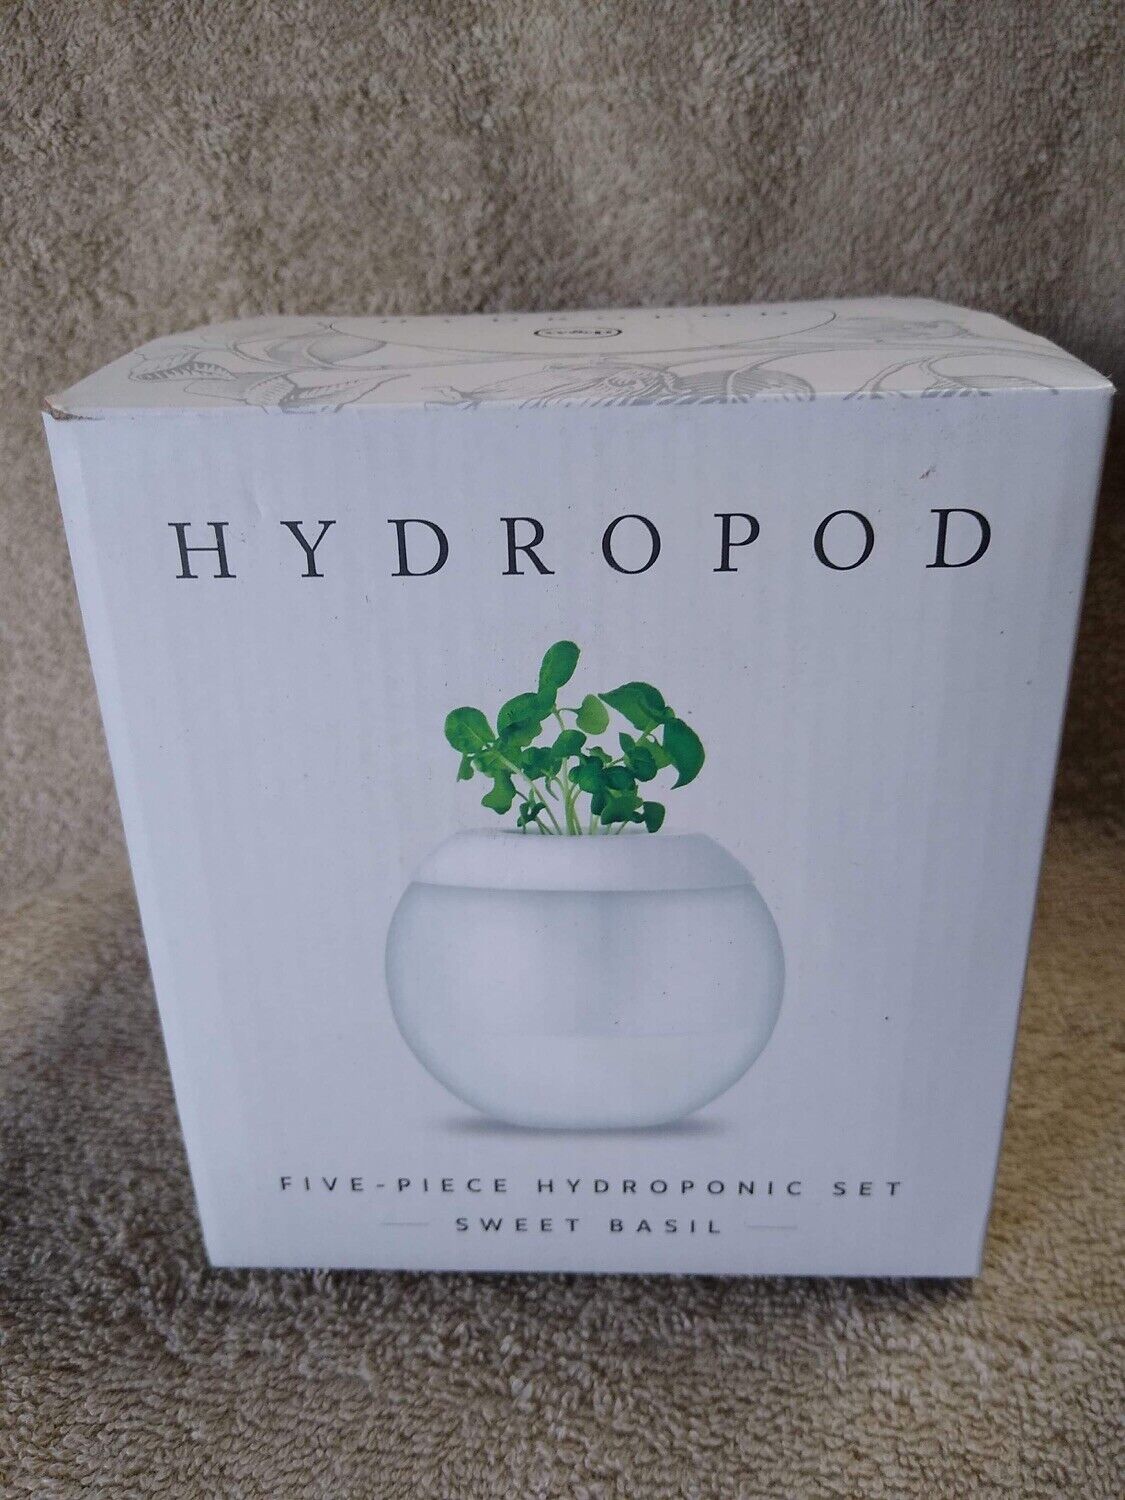 Hydropod Five-Piece Hydroponic Set - Sweet Basil by W&P Brand New Open Box